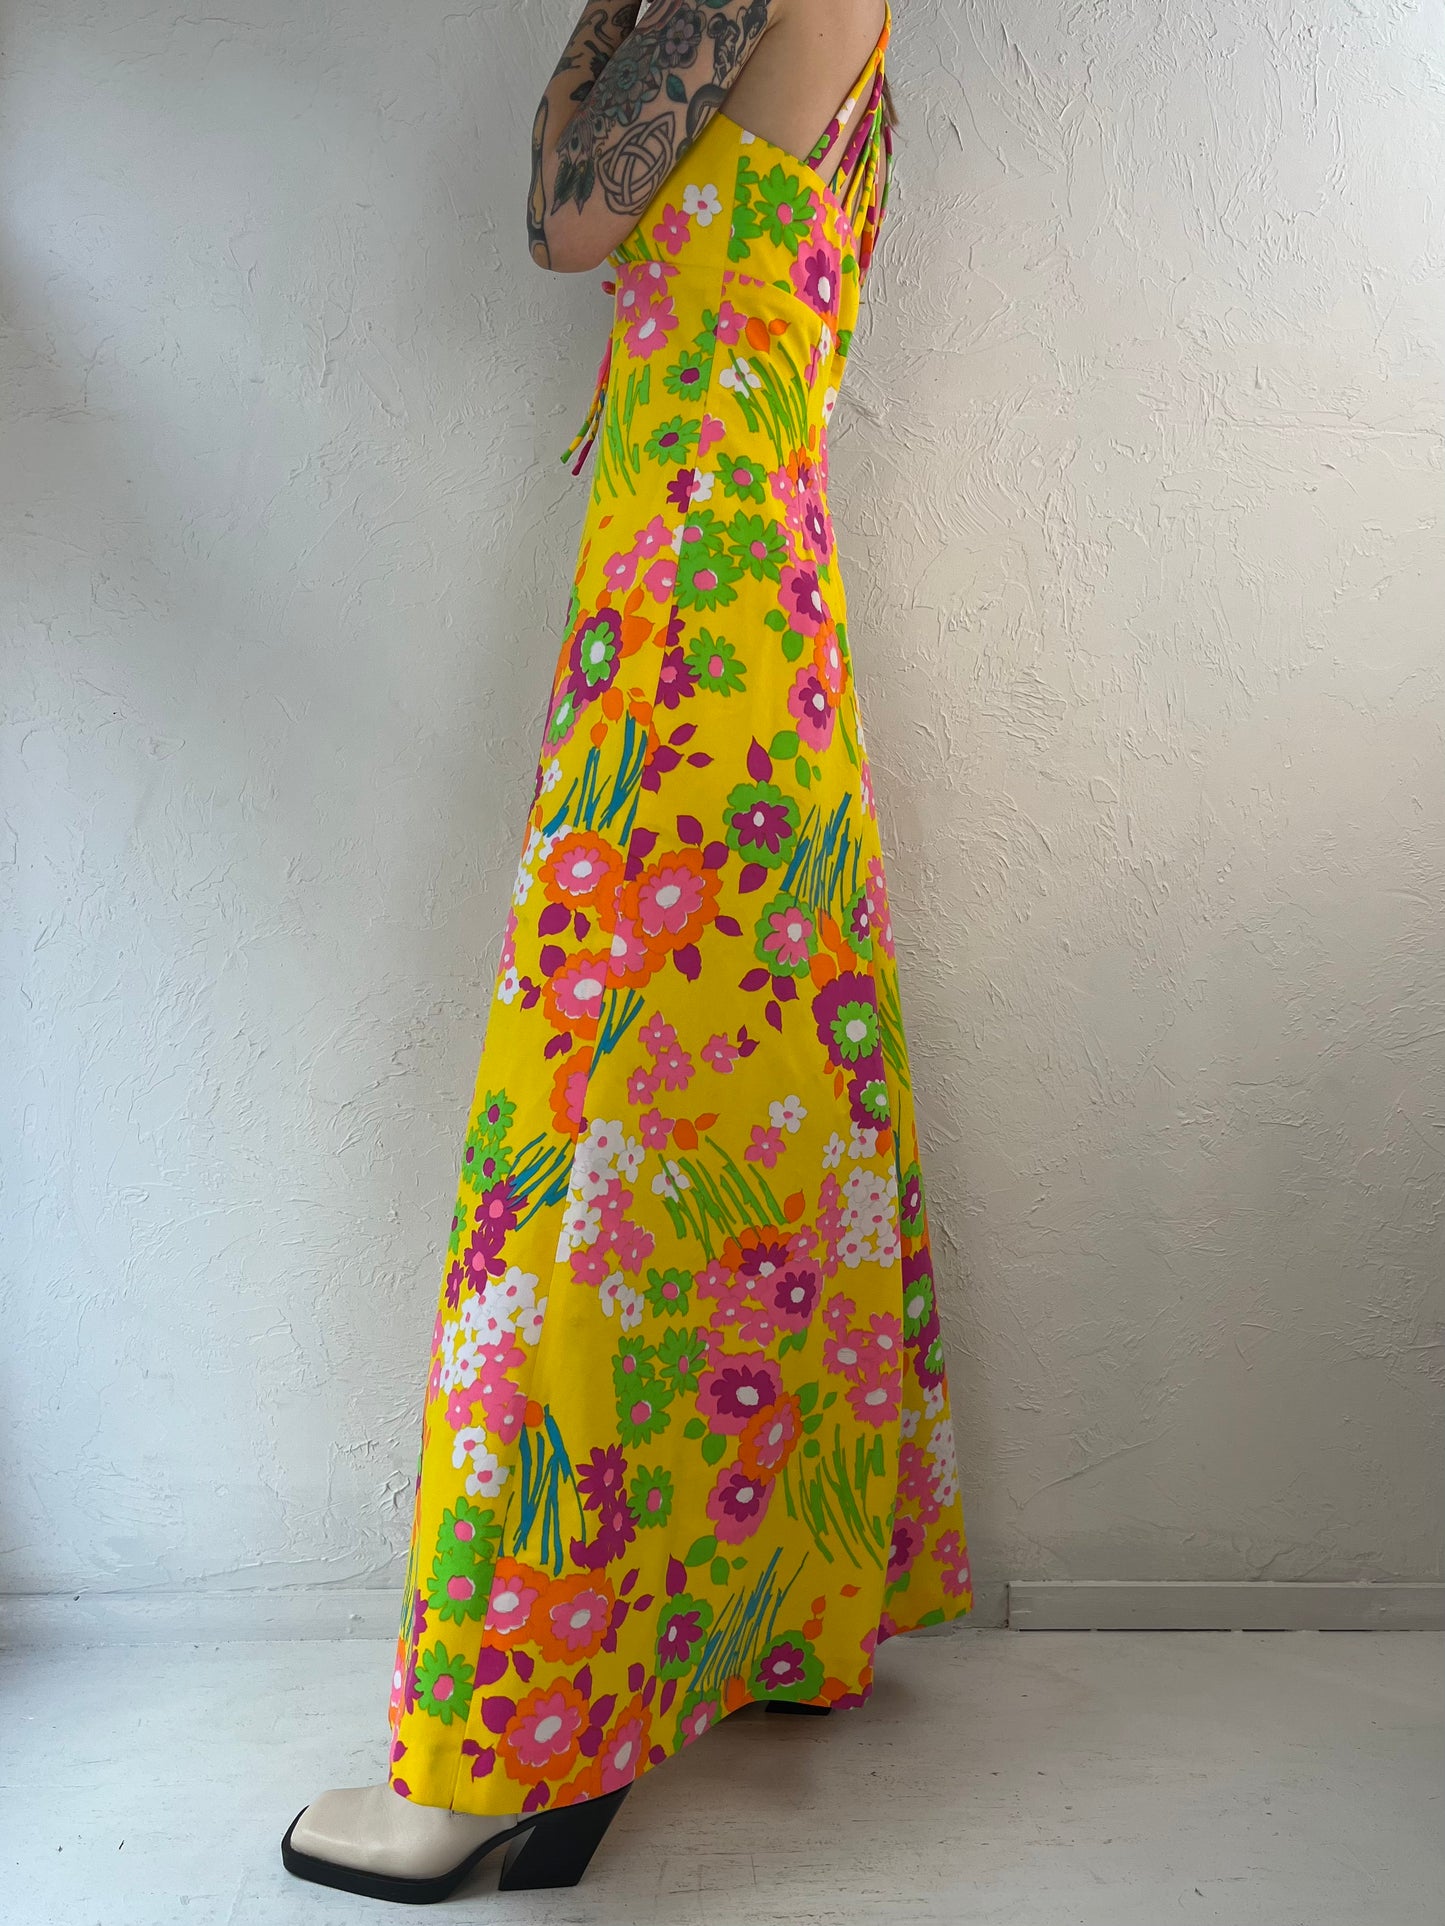 70s Floral Print Halter Hippie Dress / Small